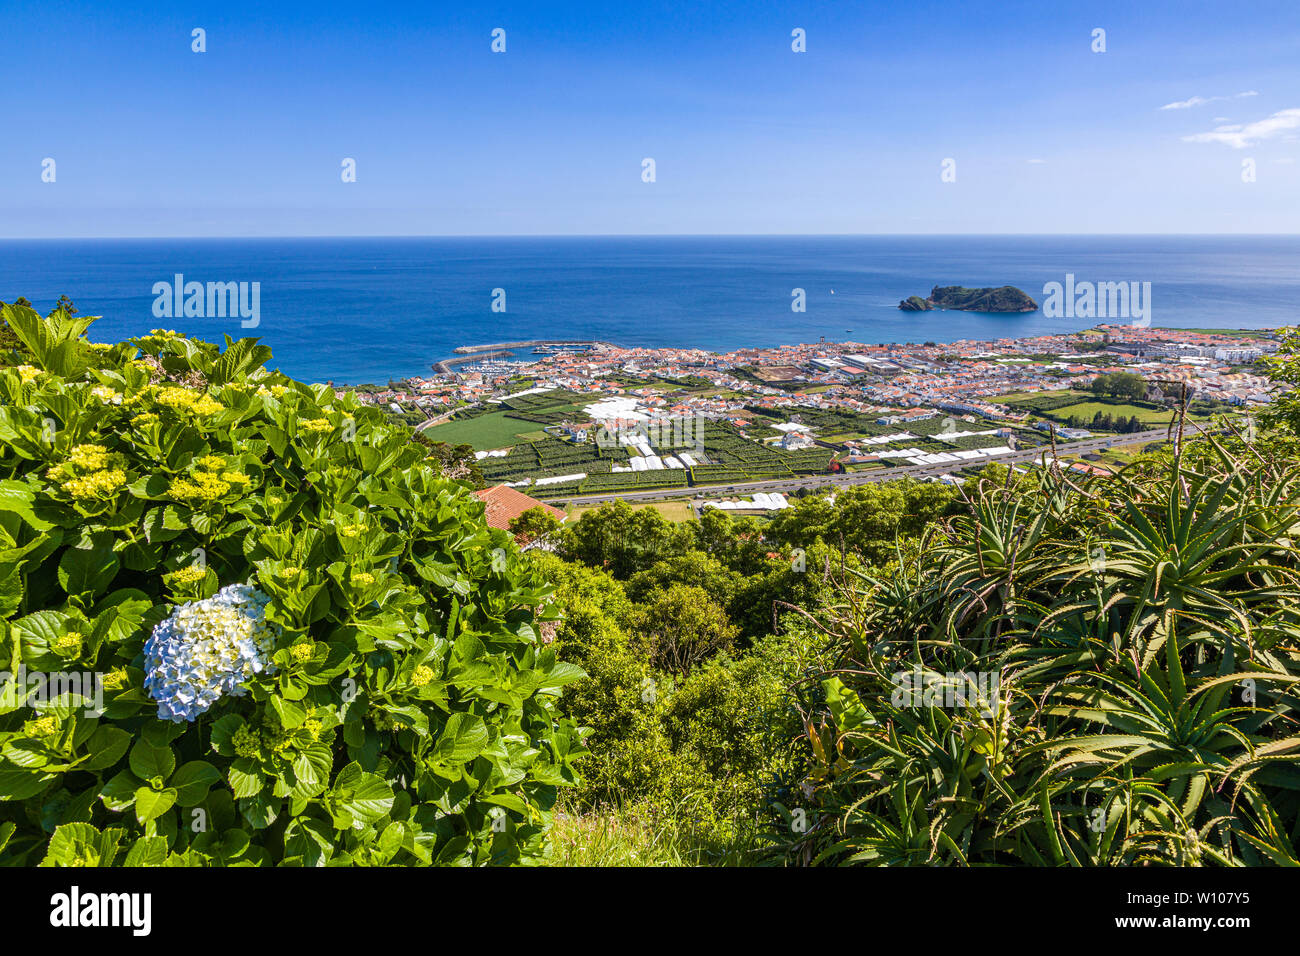 View from the mountains of Vila Franca do Campo, Sao Miguel island, Azores archipelago, Portugal Stock Photo